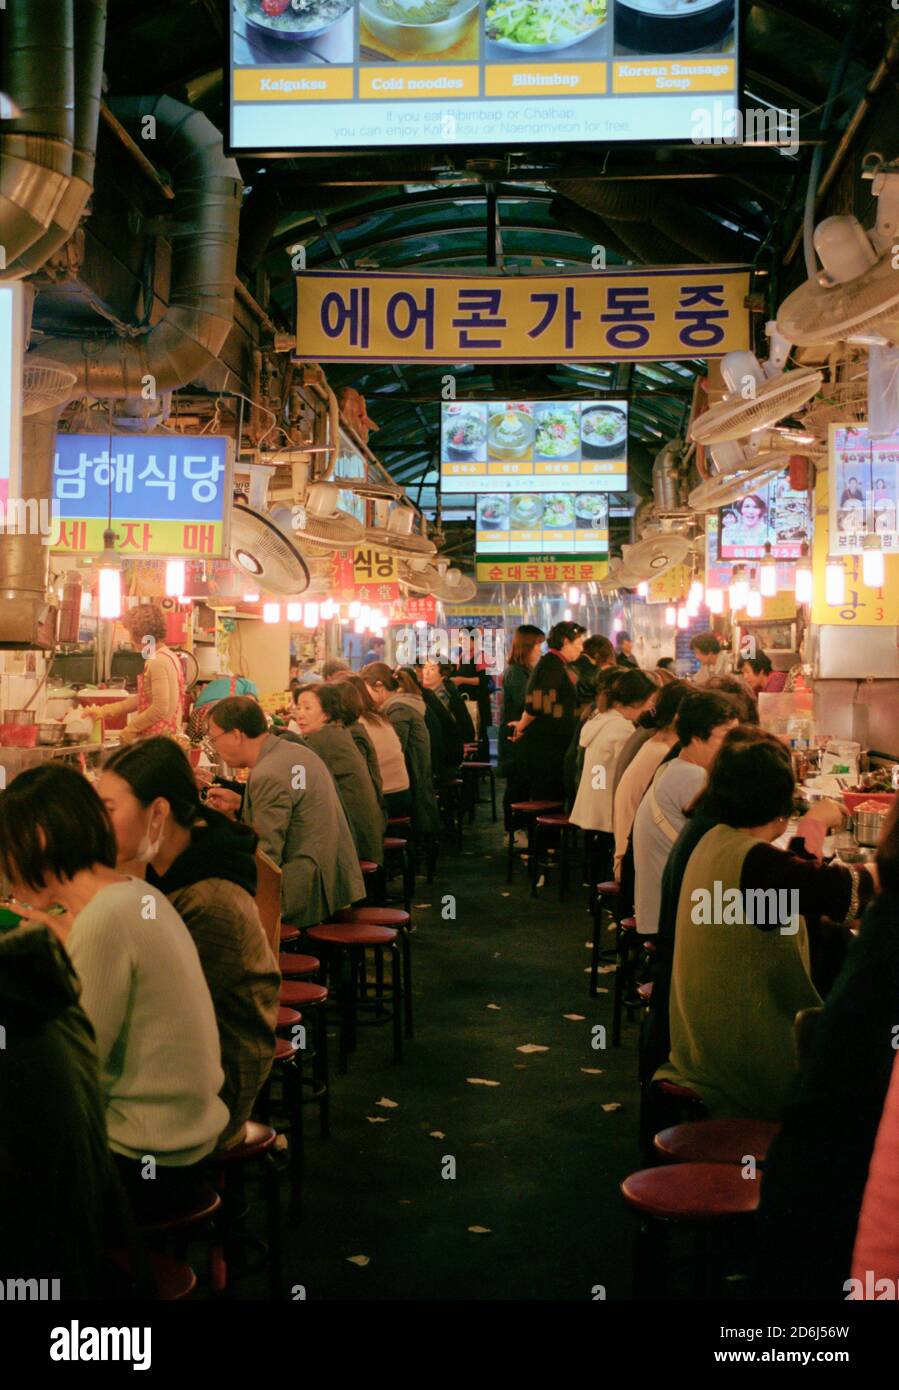 Street Market Diners on Stools, Seoul, South Korea Stock Photo